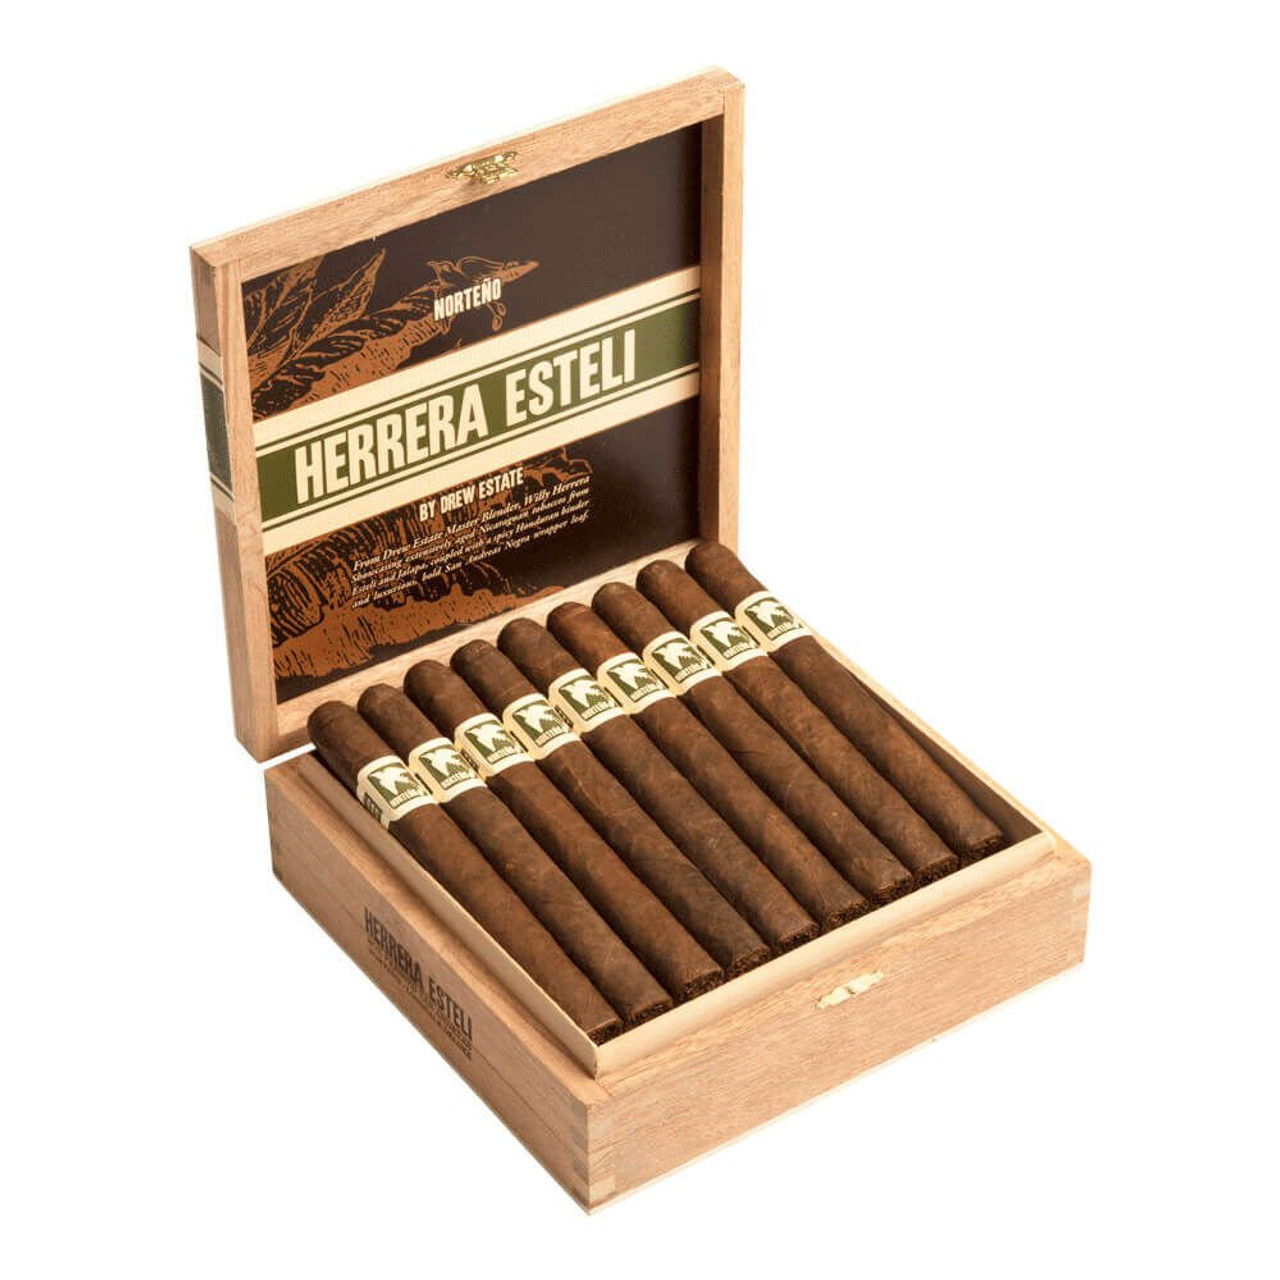 Herrera Esteli Norteno Toro Especial Cigars - 6 x 52 (Box of 25)